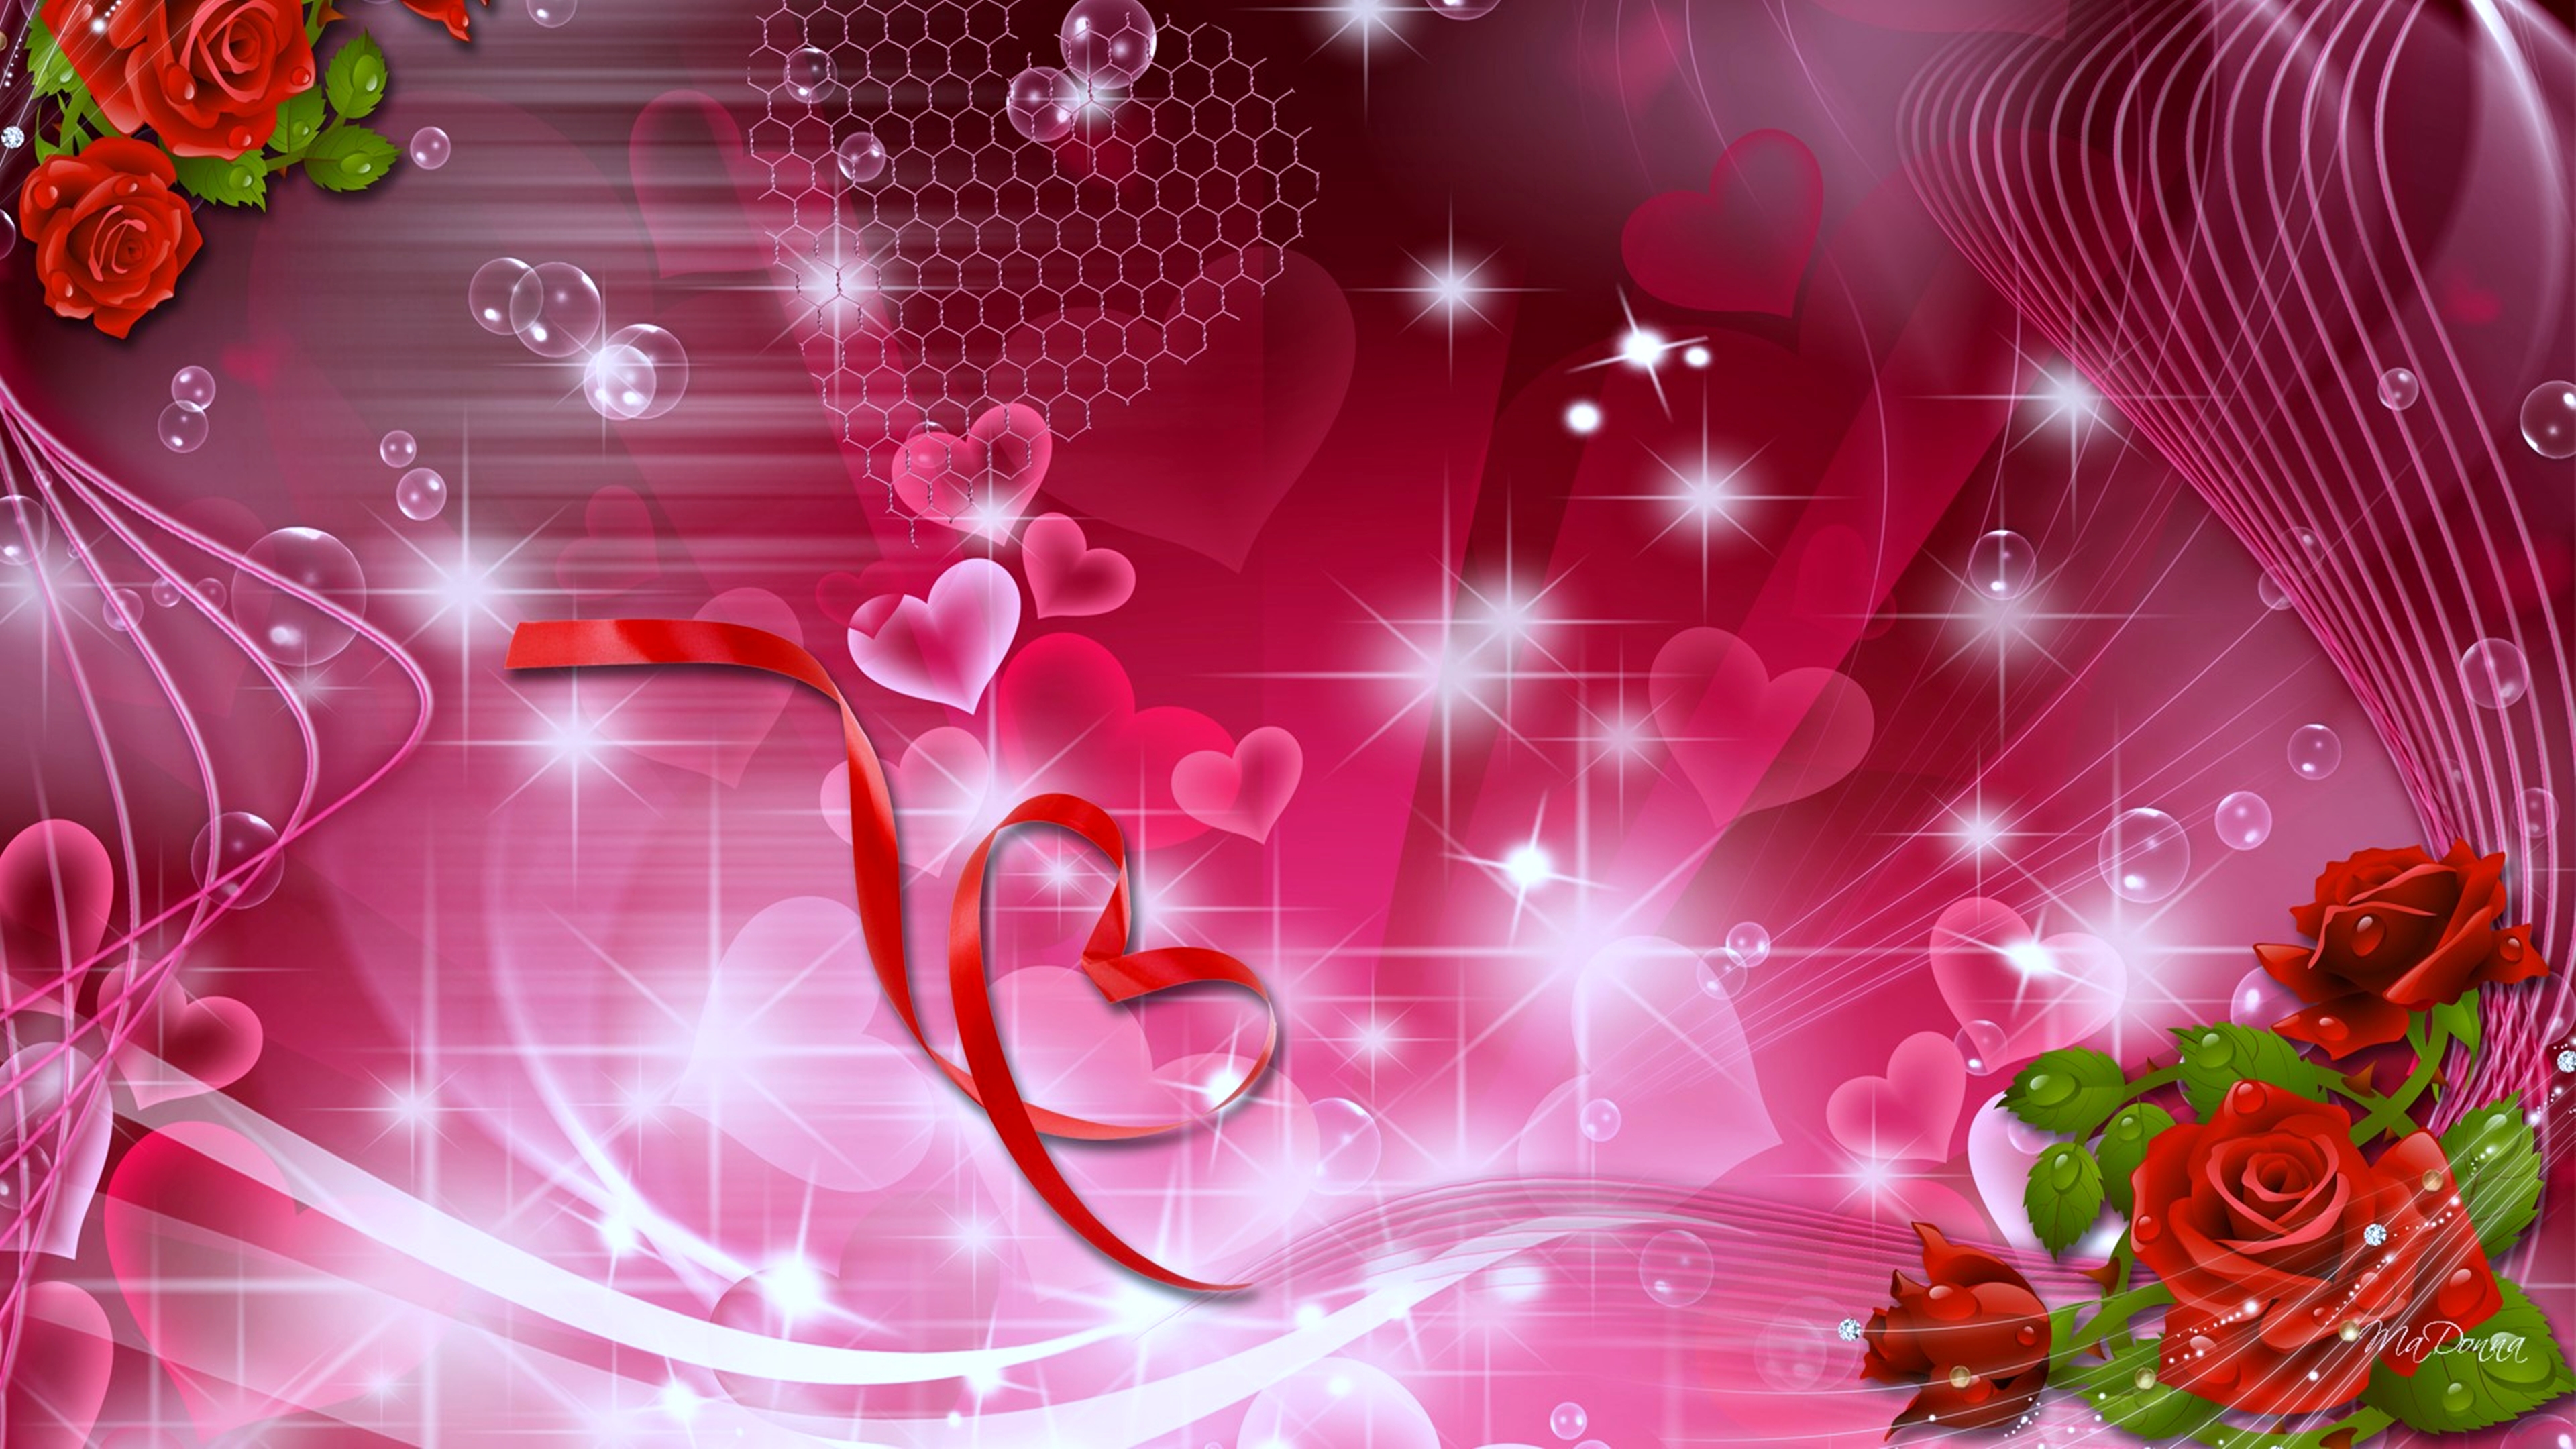 Mobile wallpaper love, artistic, rose, heart, romantic